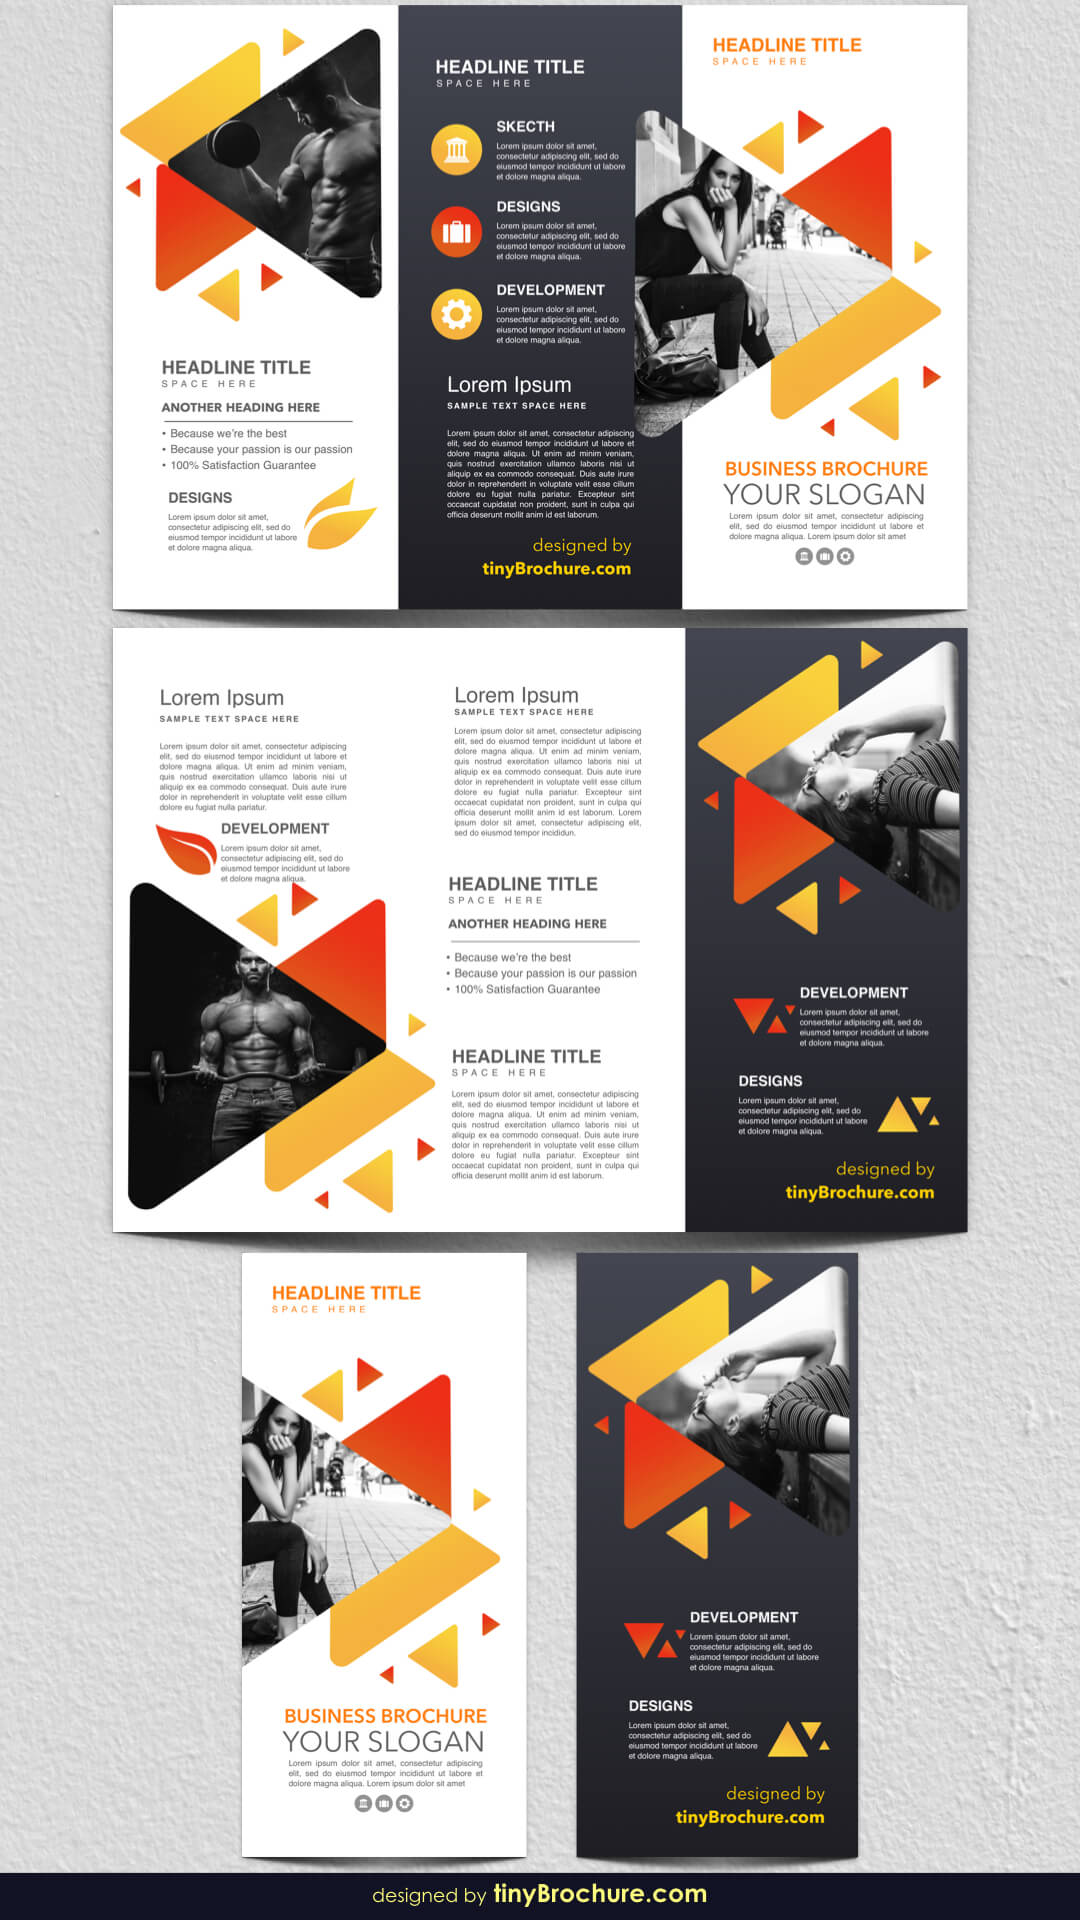 3 Panel Brochure Template Google Docs 2019 | Graphic Design For Brochure Template For Google Docs